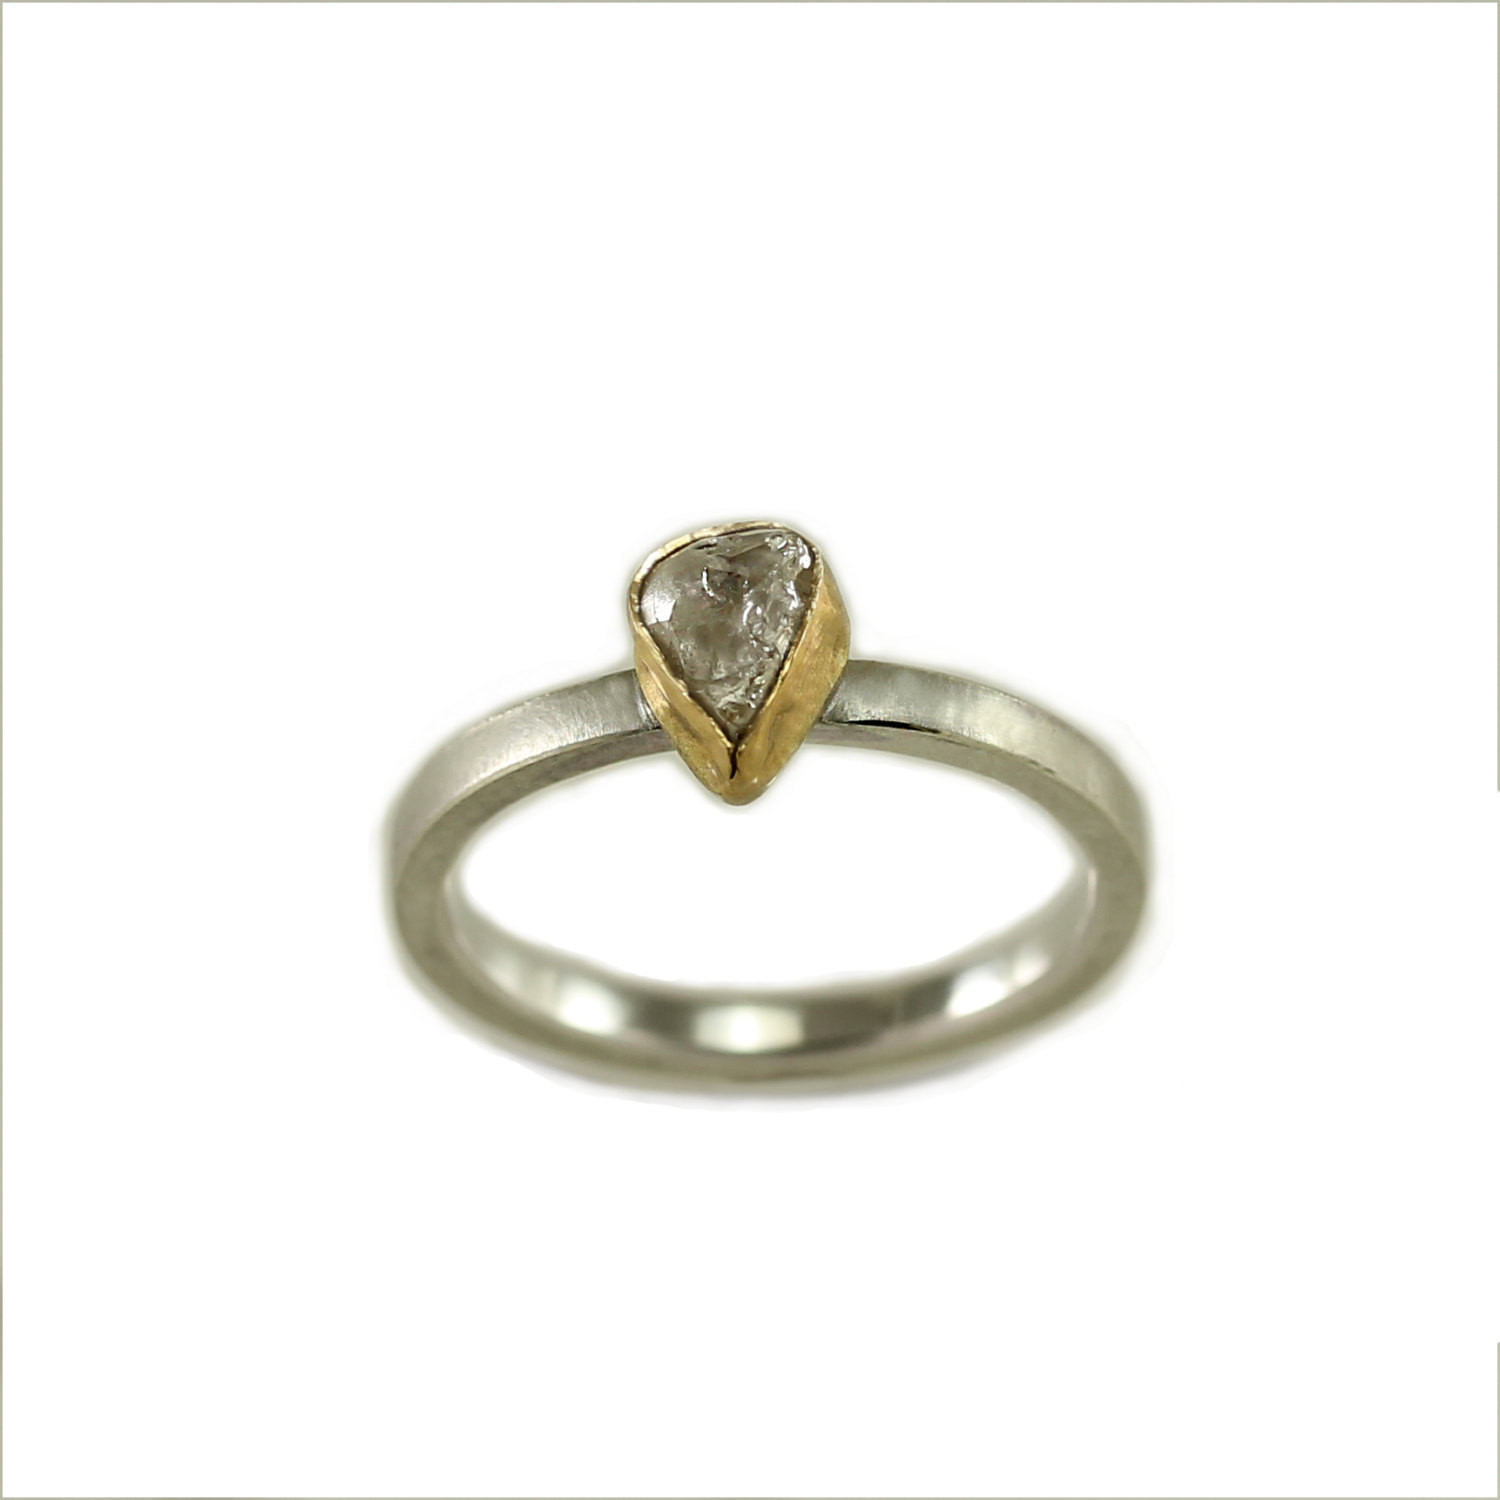 Rough Cut Diamond Engagement Ring
 Rough Cut Diamond Engagement Ring 2mm wide Slim by